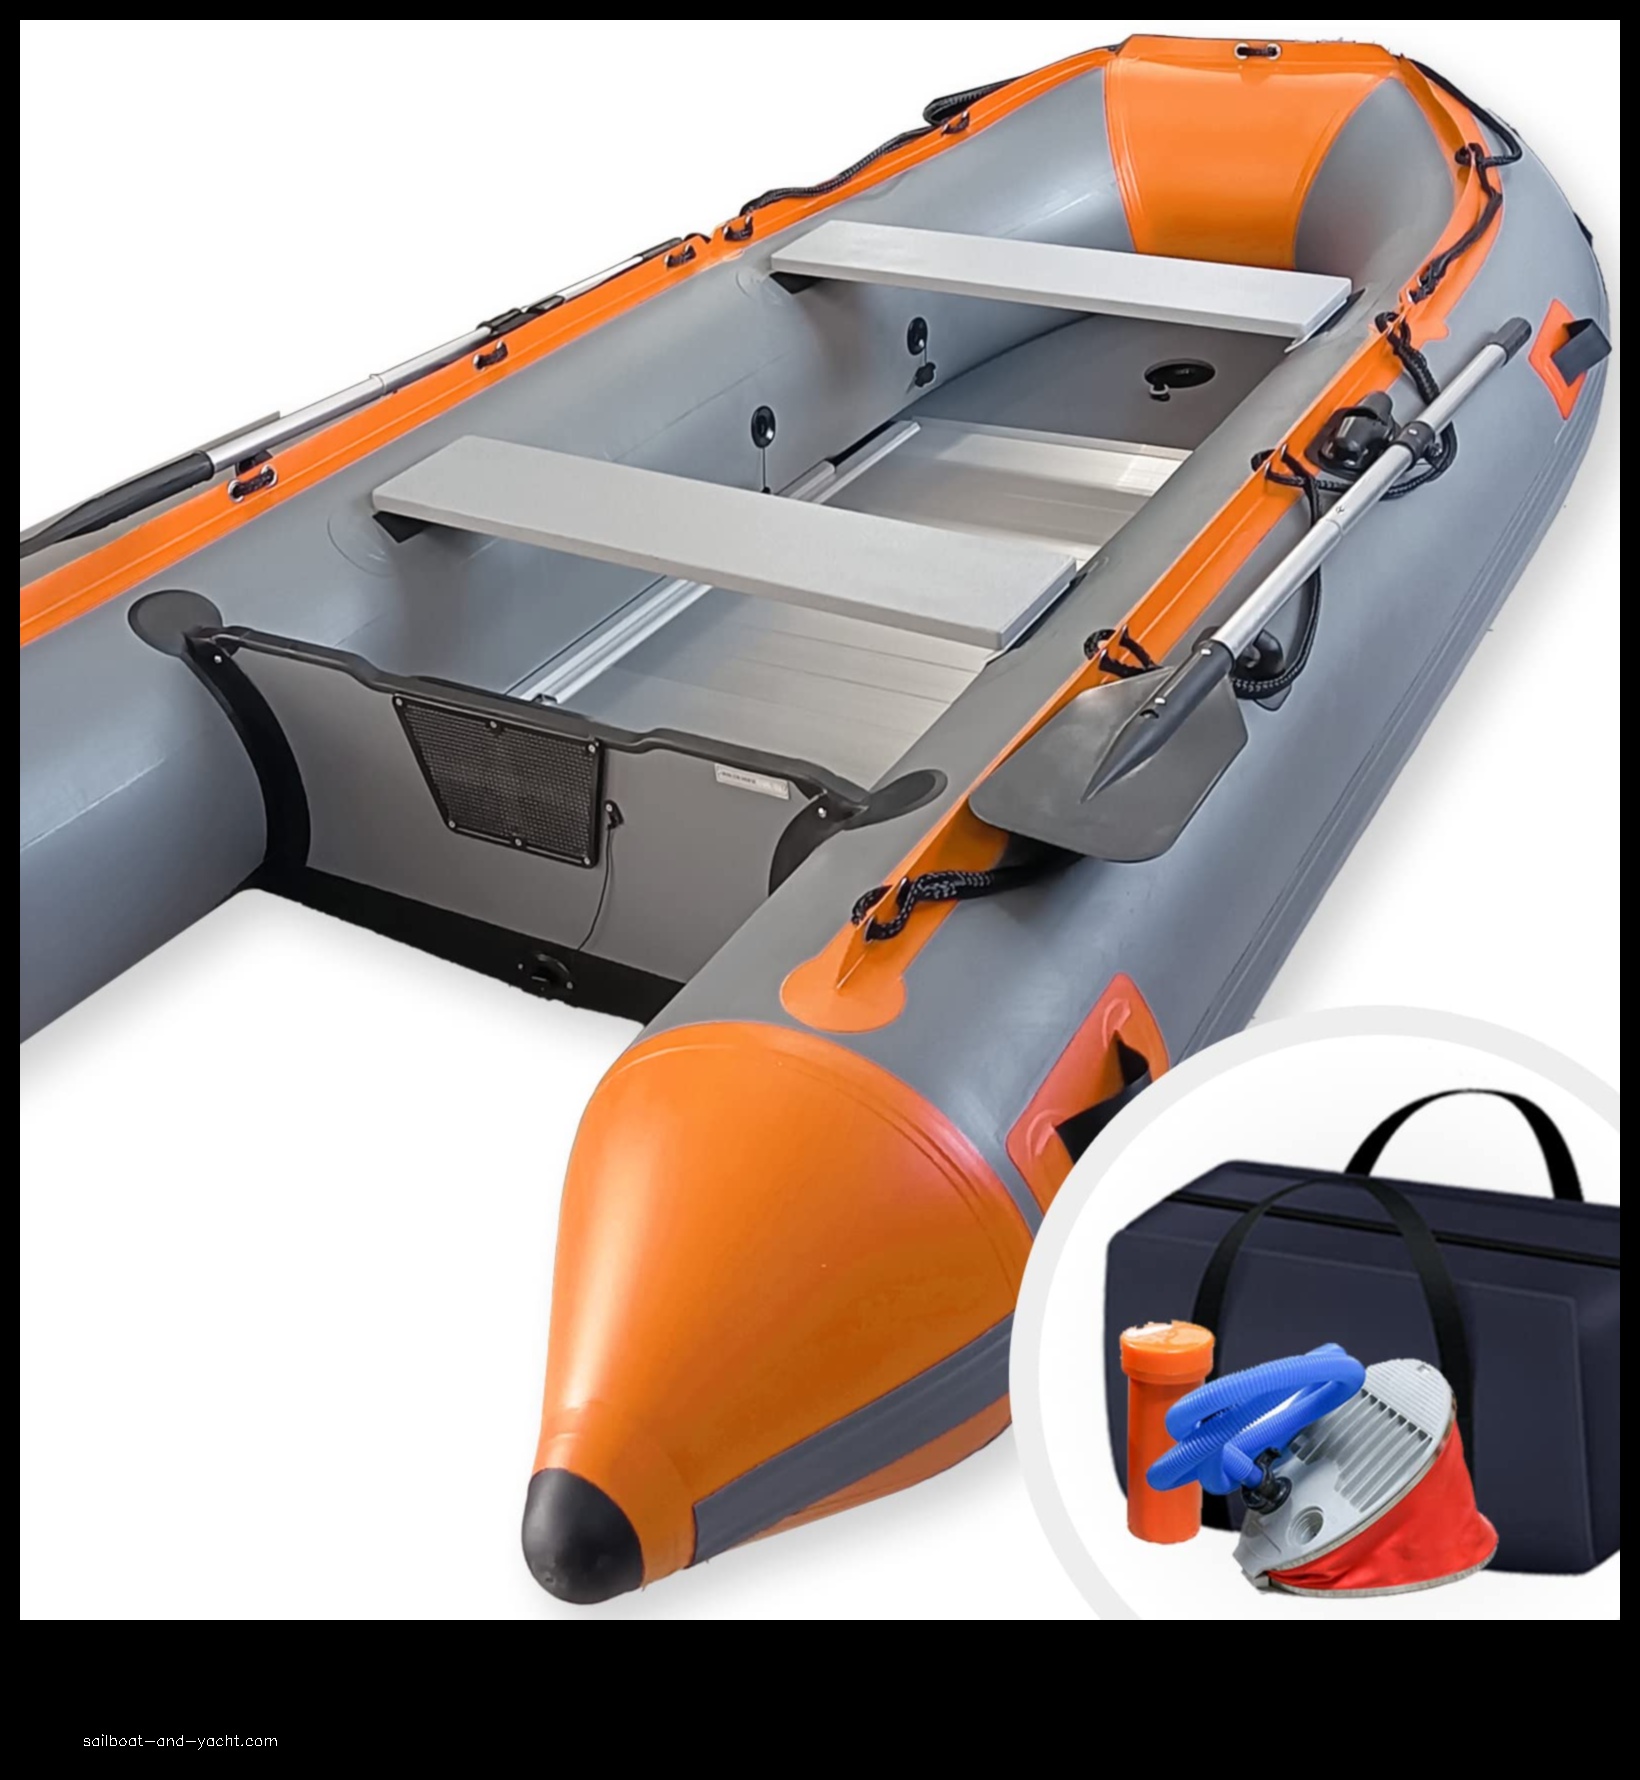 2011 tetra inflatable e230 boat